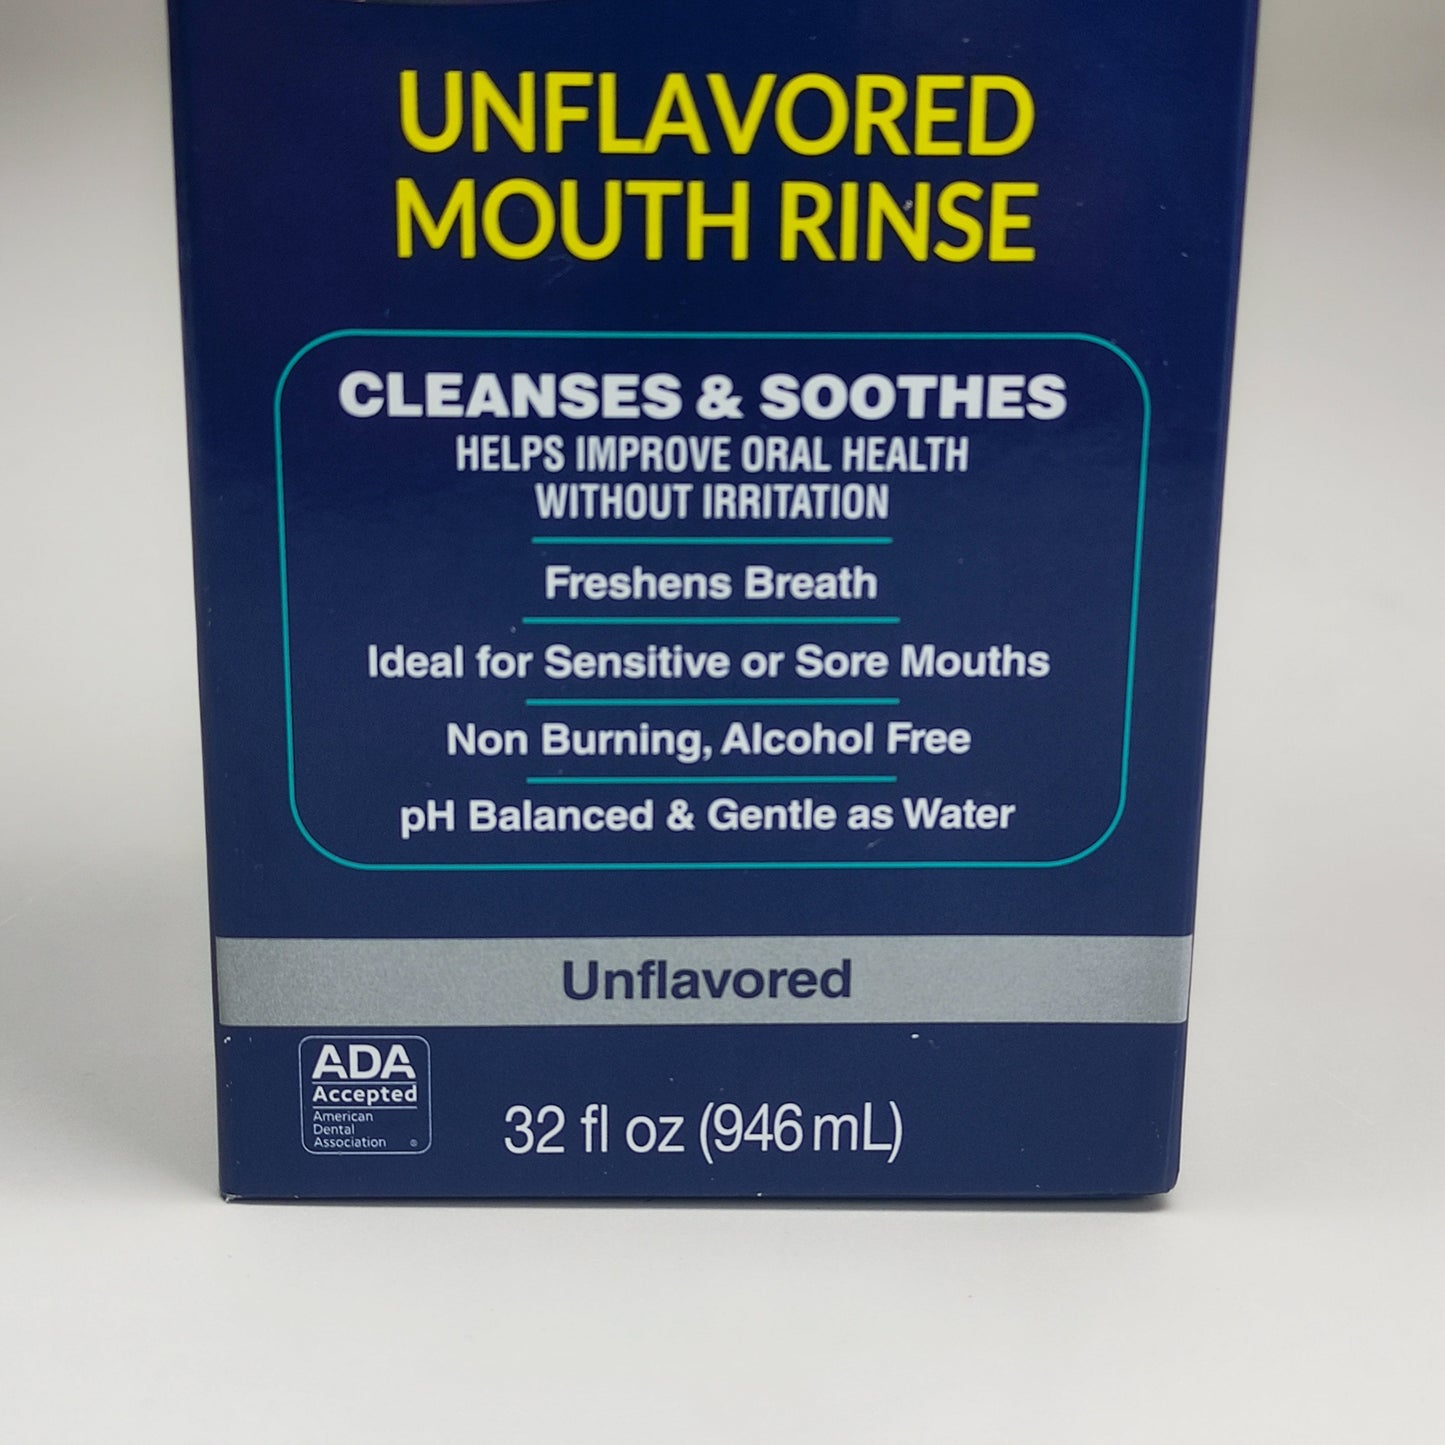 CLOSYS Ultra Sensitive Mouth Rinse 3 PACK (32oz per bottle)